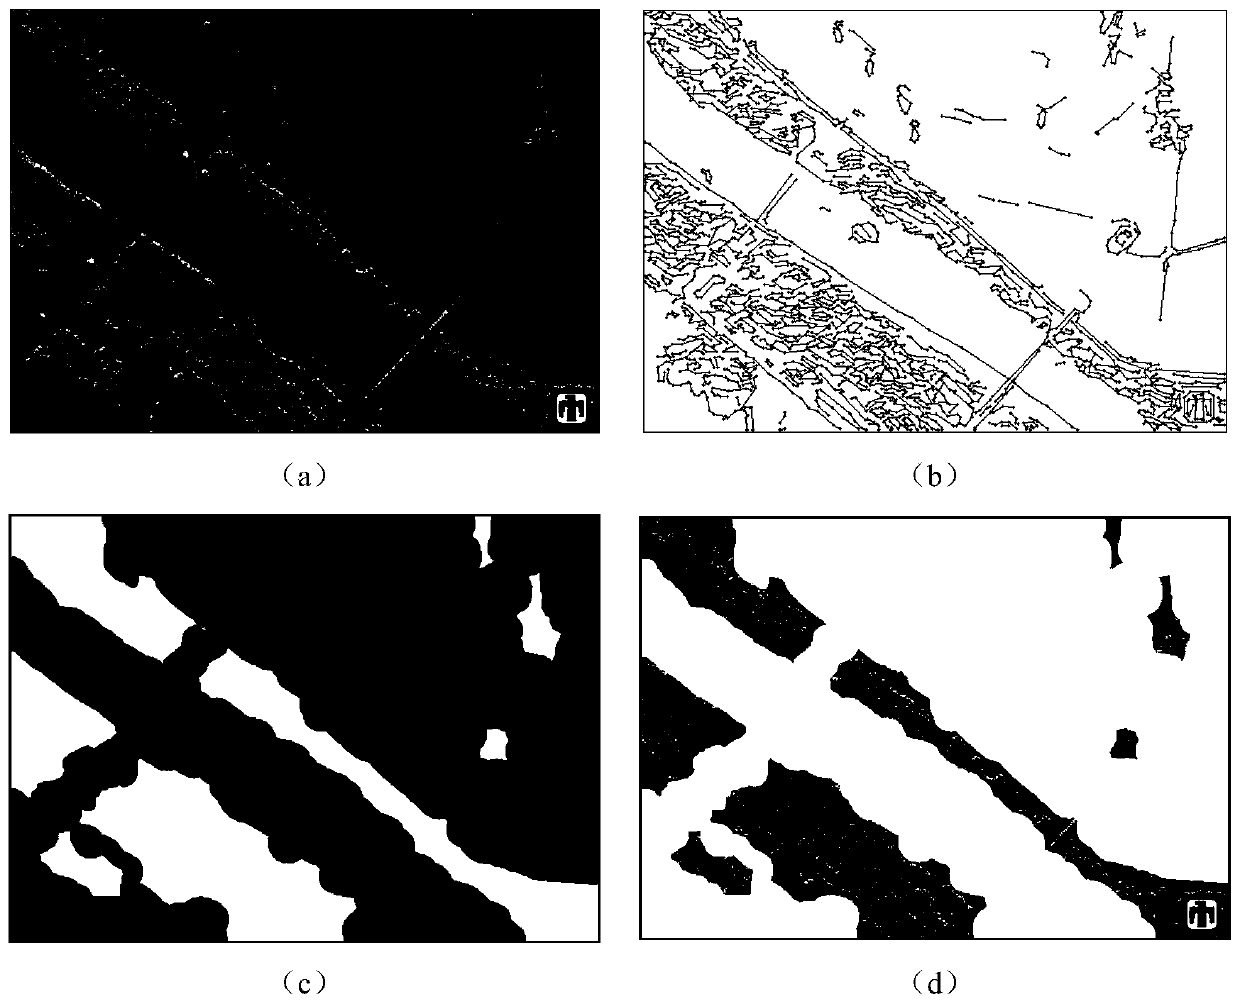 Stochastic Gradient Bayesian SAR Image Segmentation Method Based on Sketch Structure